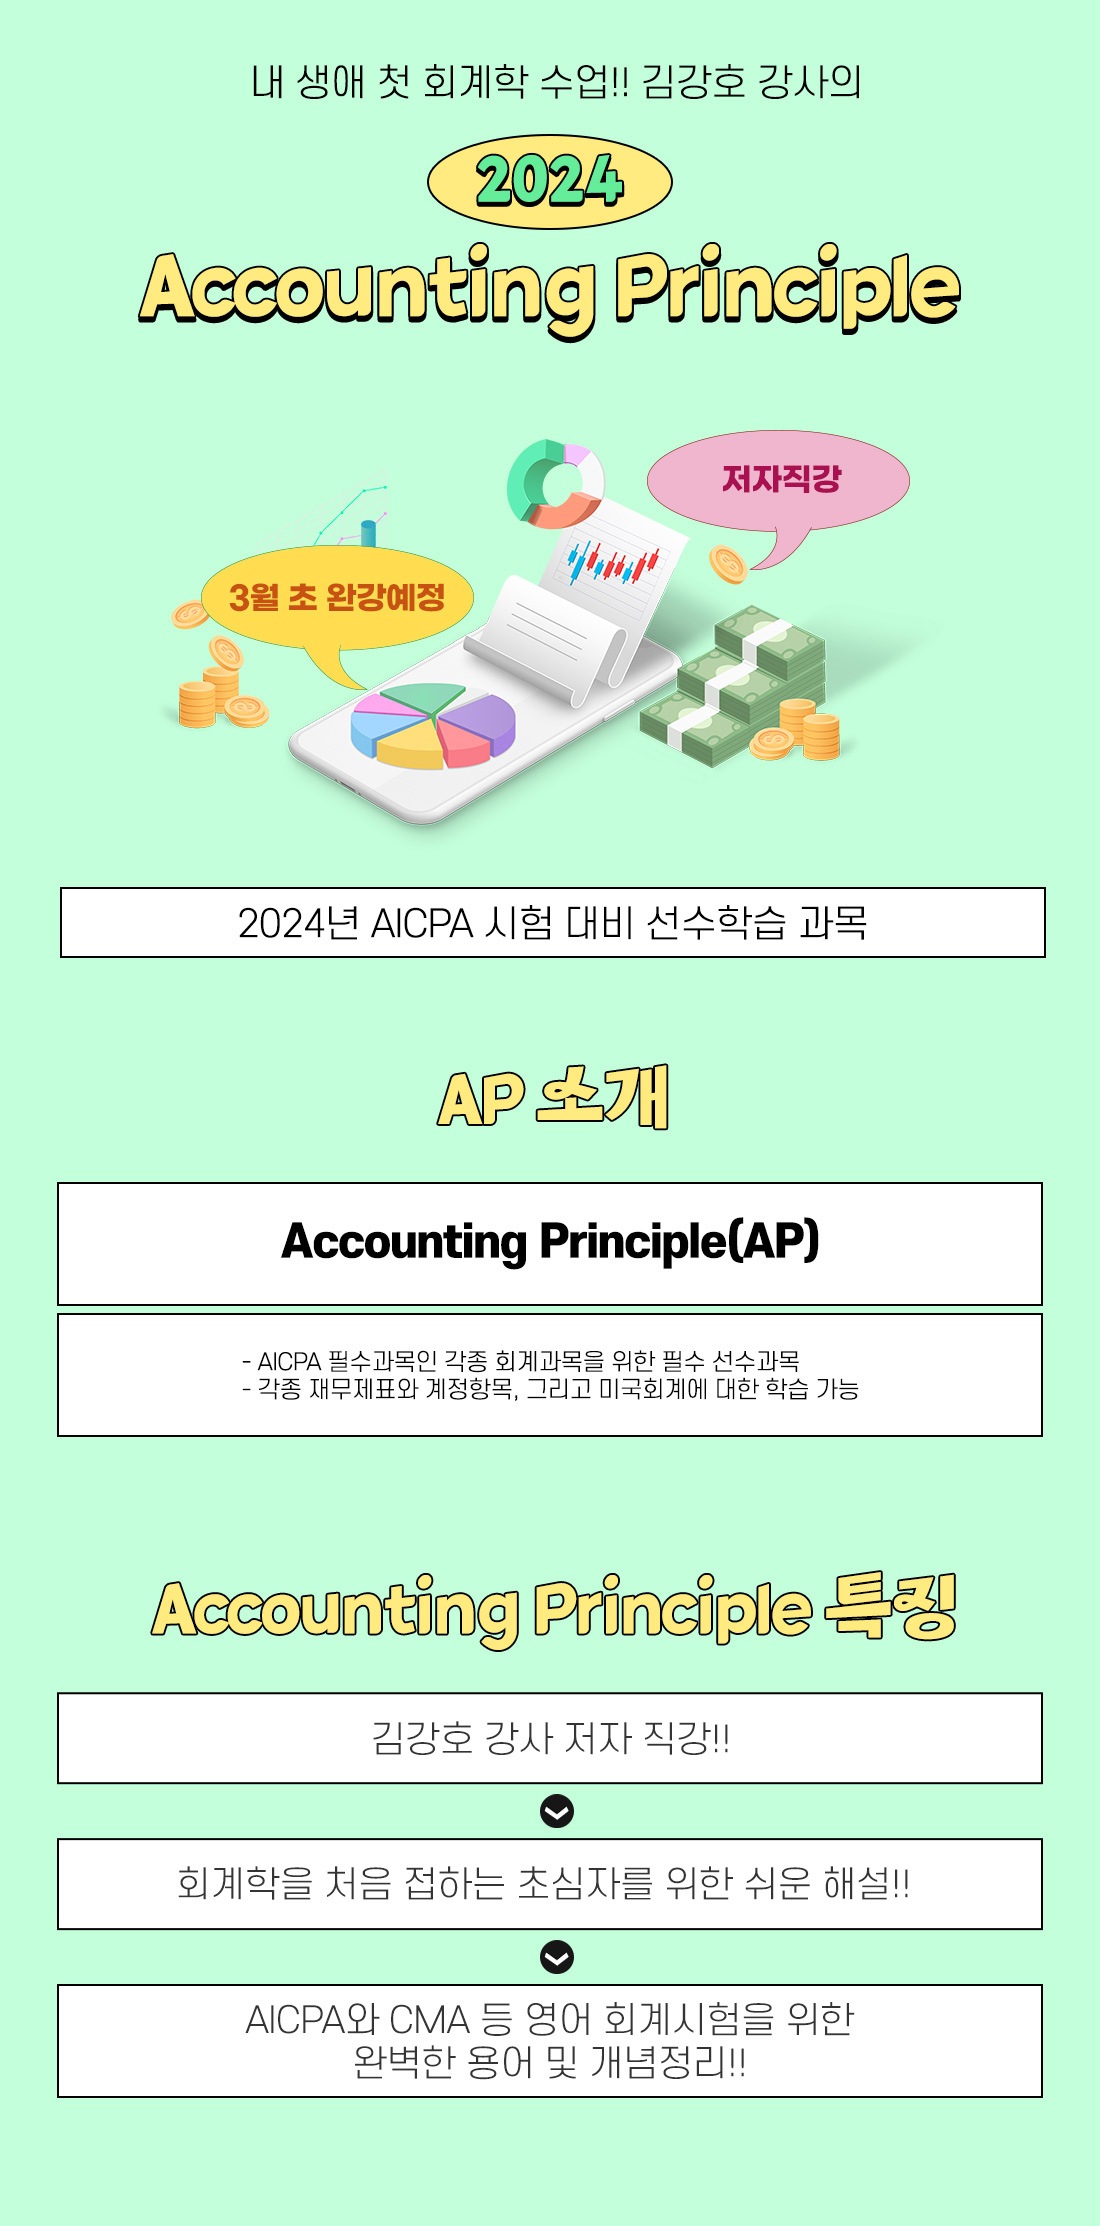 AICPA_BASIC_Accounting Principle